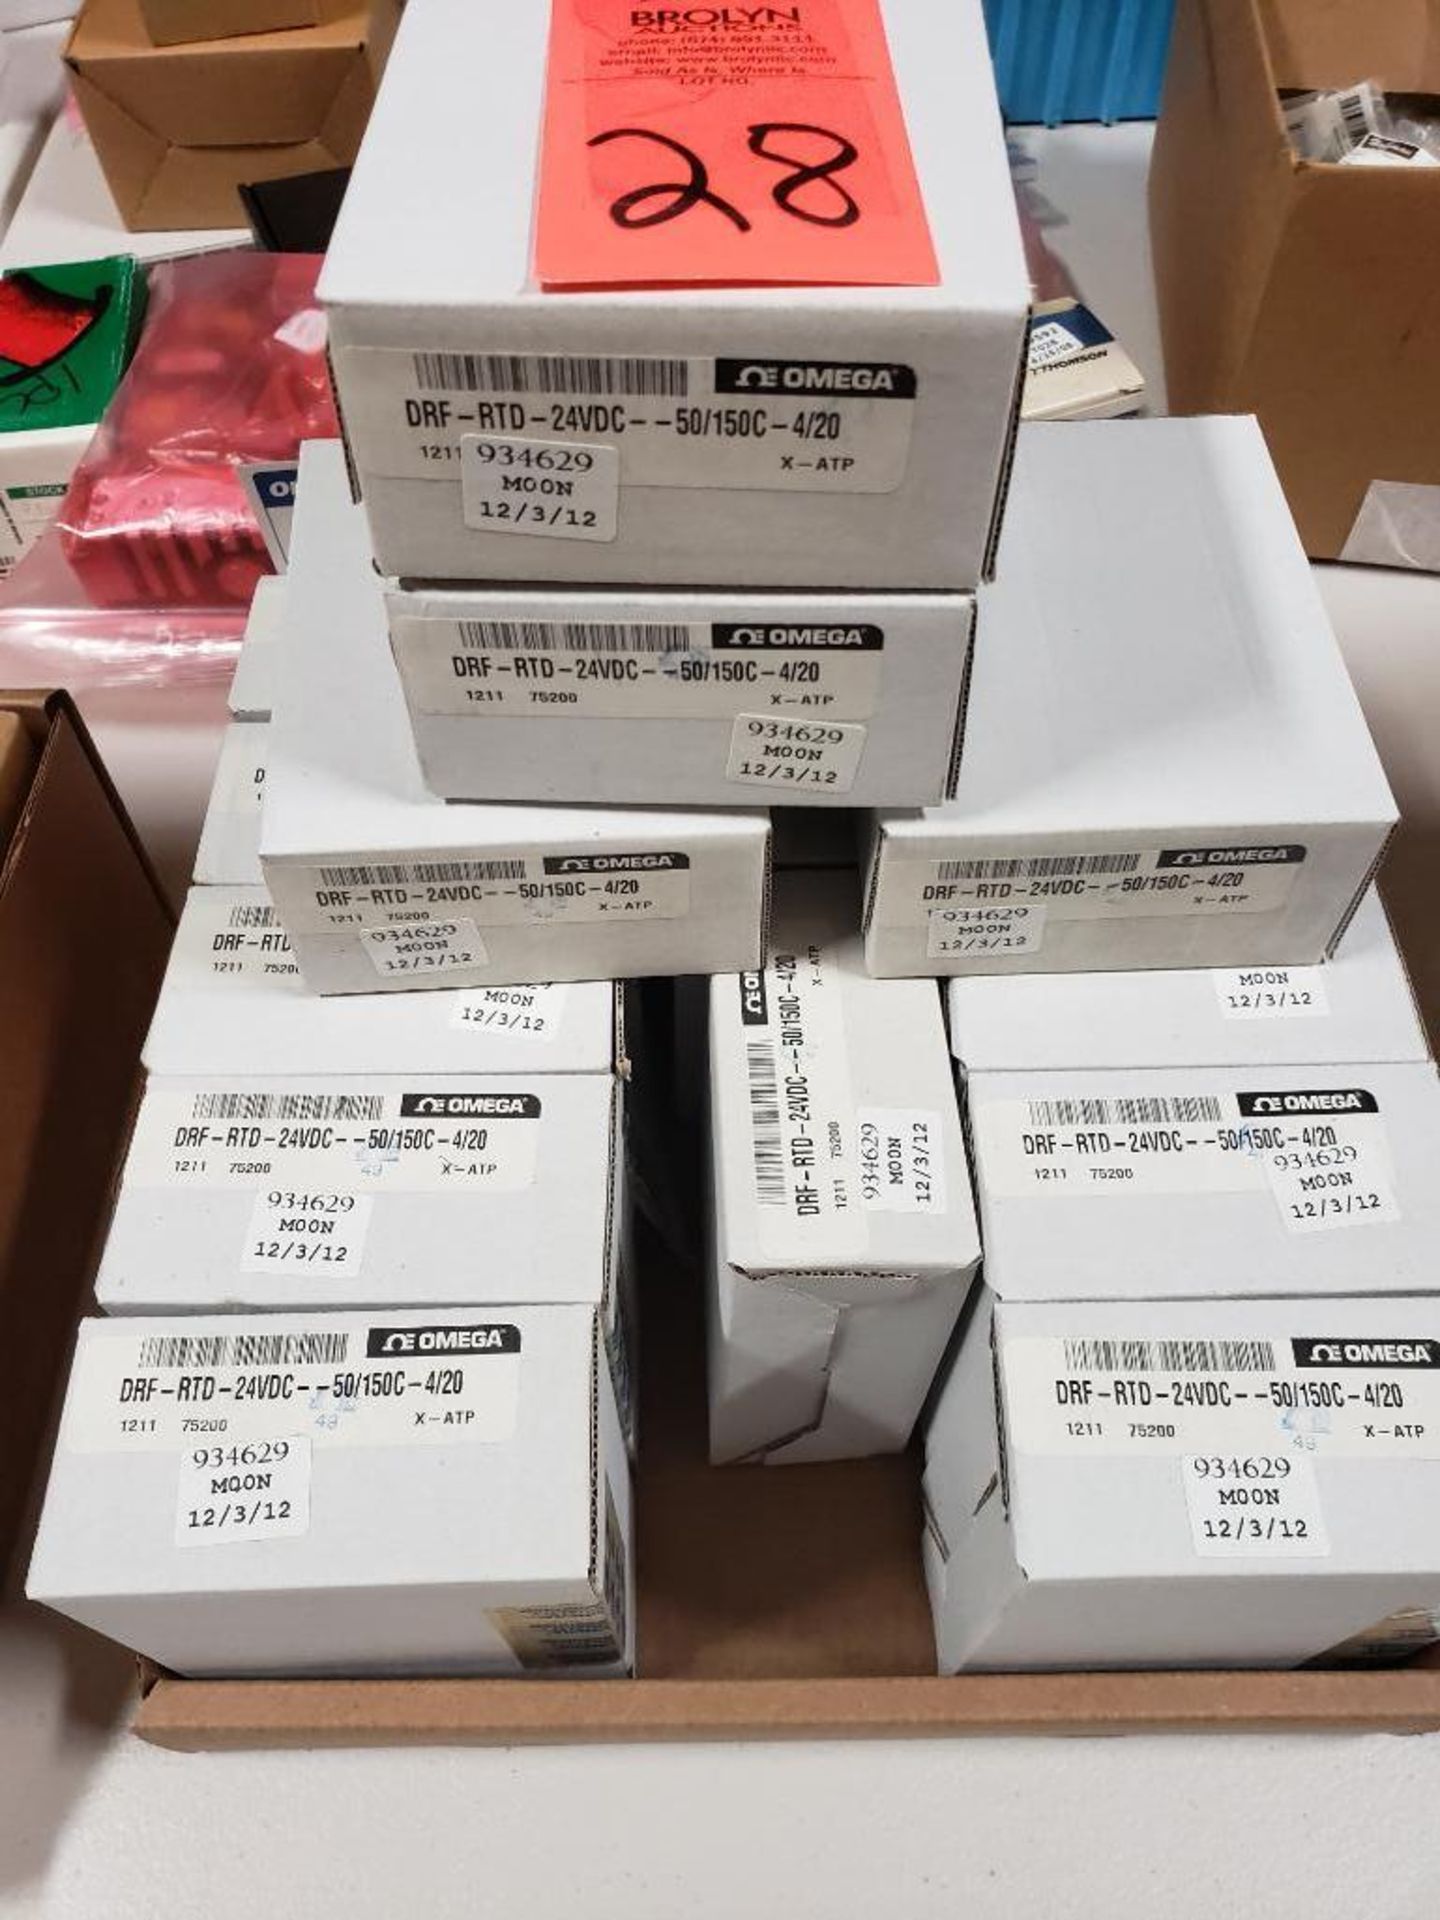 Qty 17 - Omega model DRF-RTD-24VDC-50/150C-4/20. New in boxes.